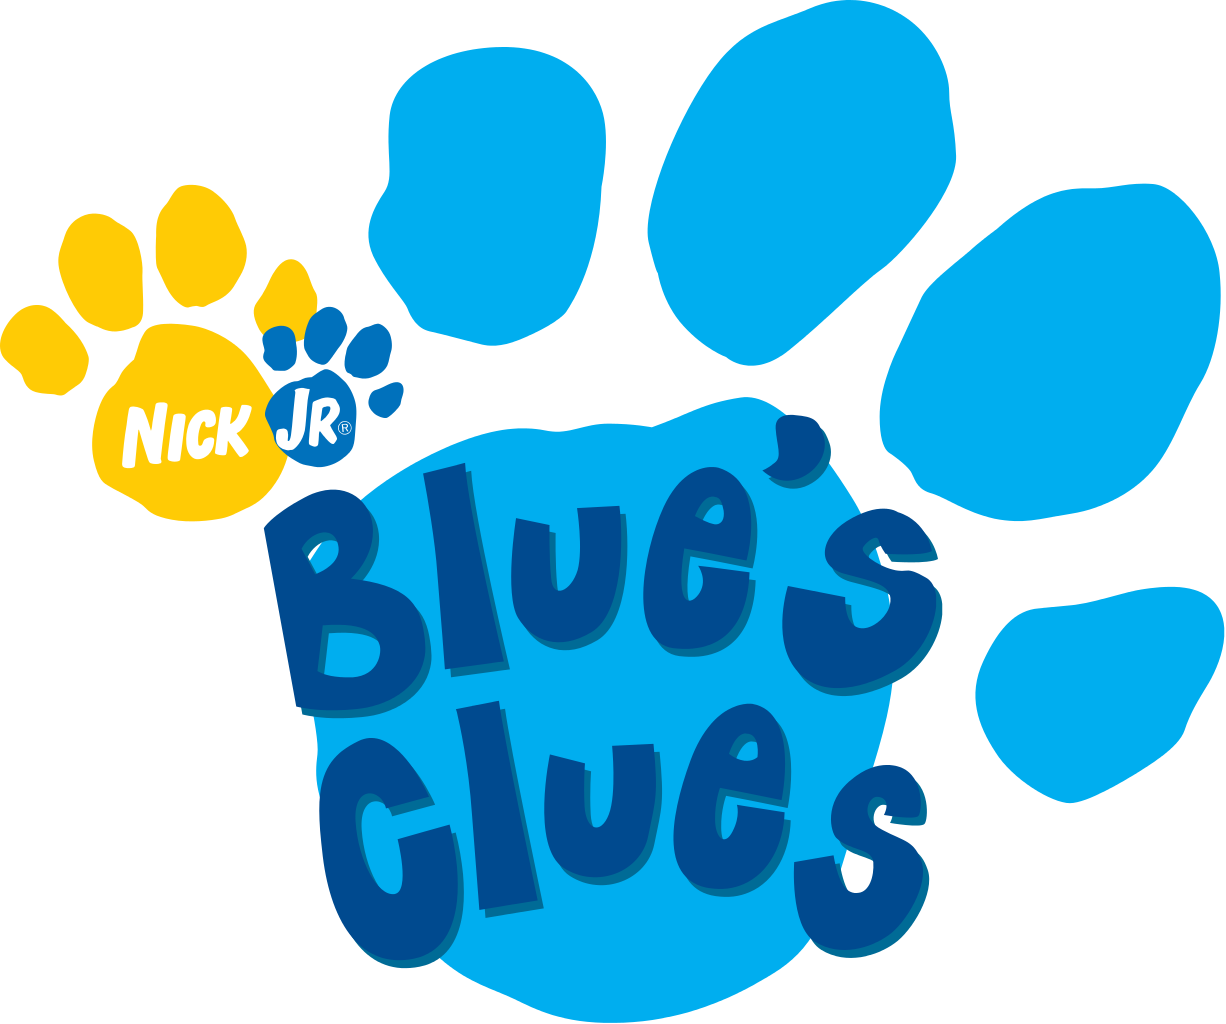 File:Blues Clues logo.svg - Wikipedia, the free encyclopedia